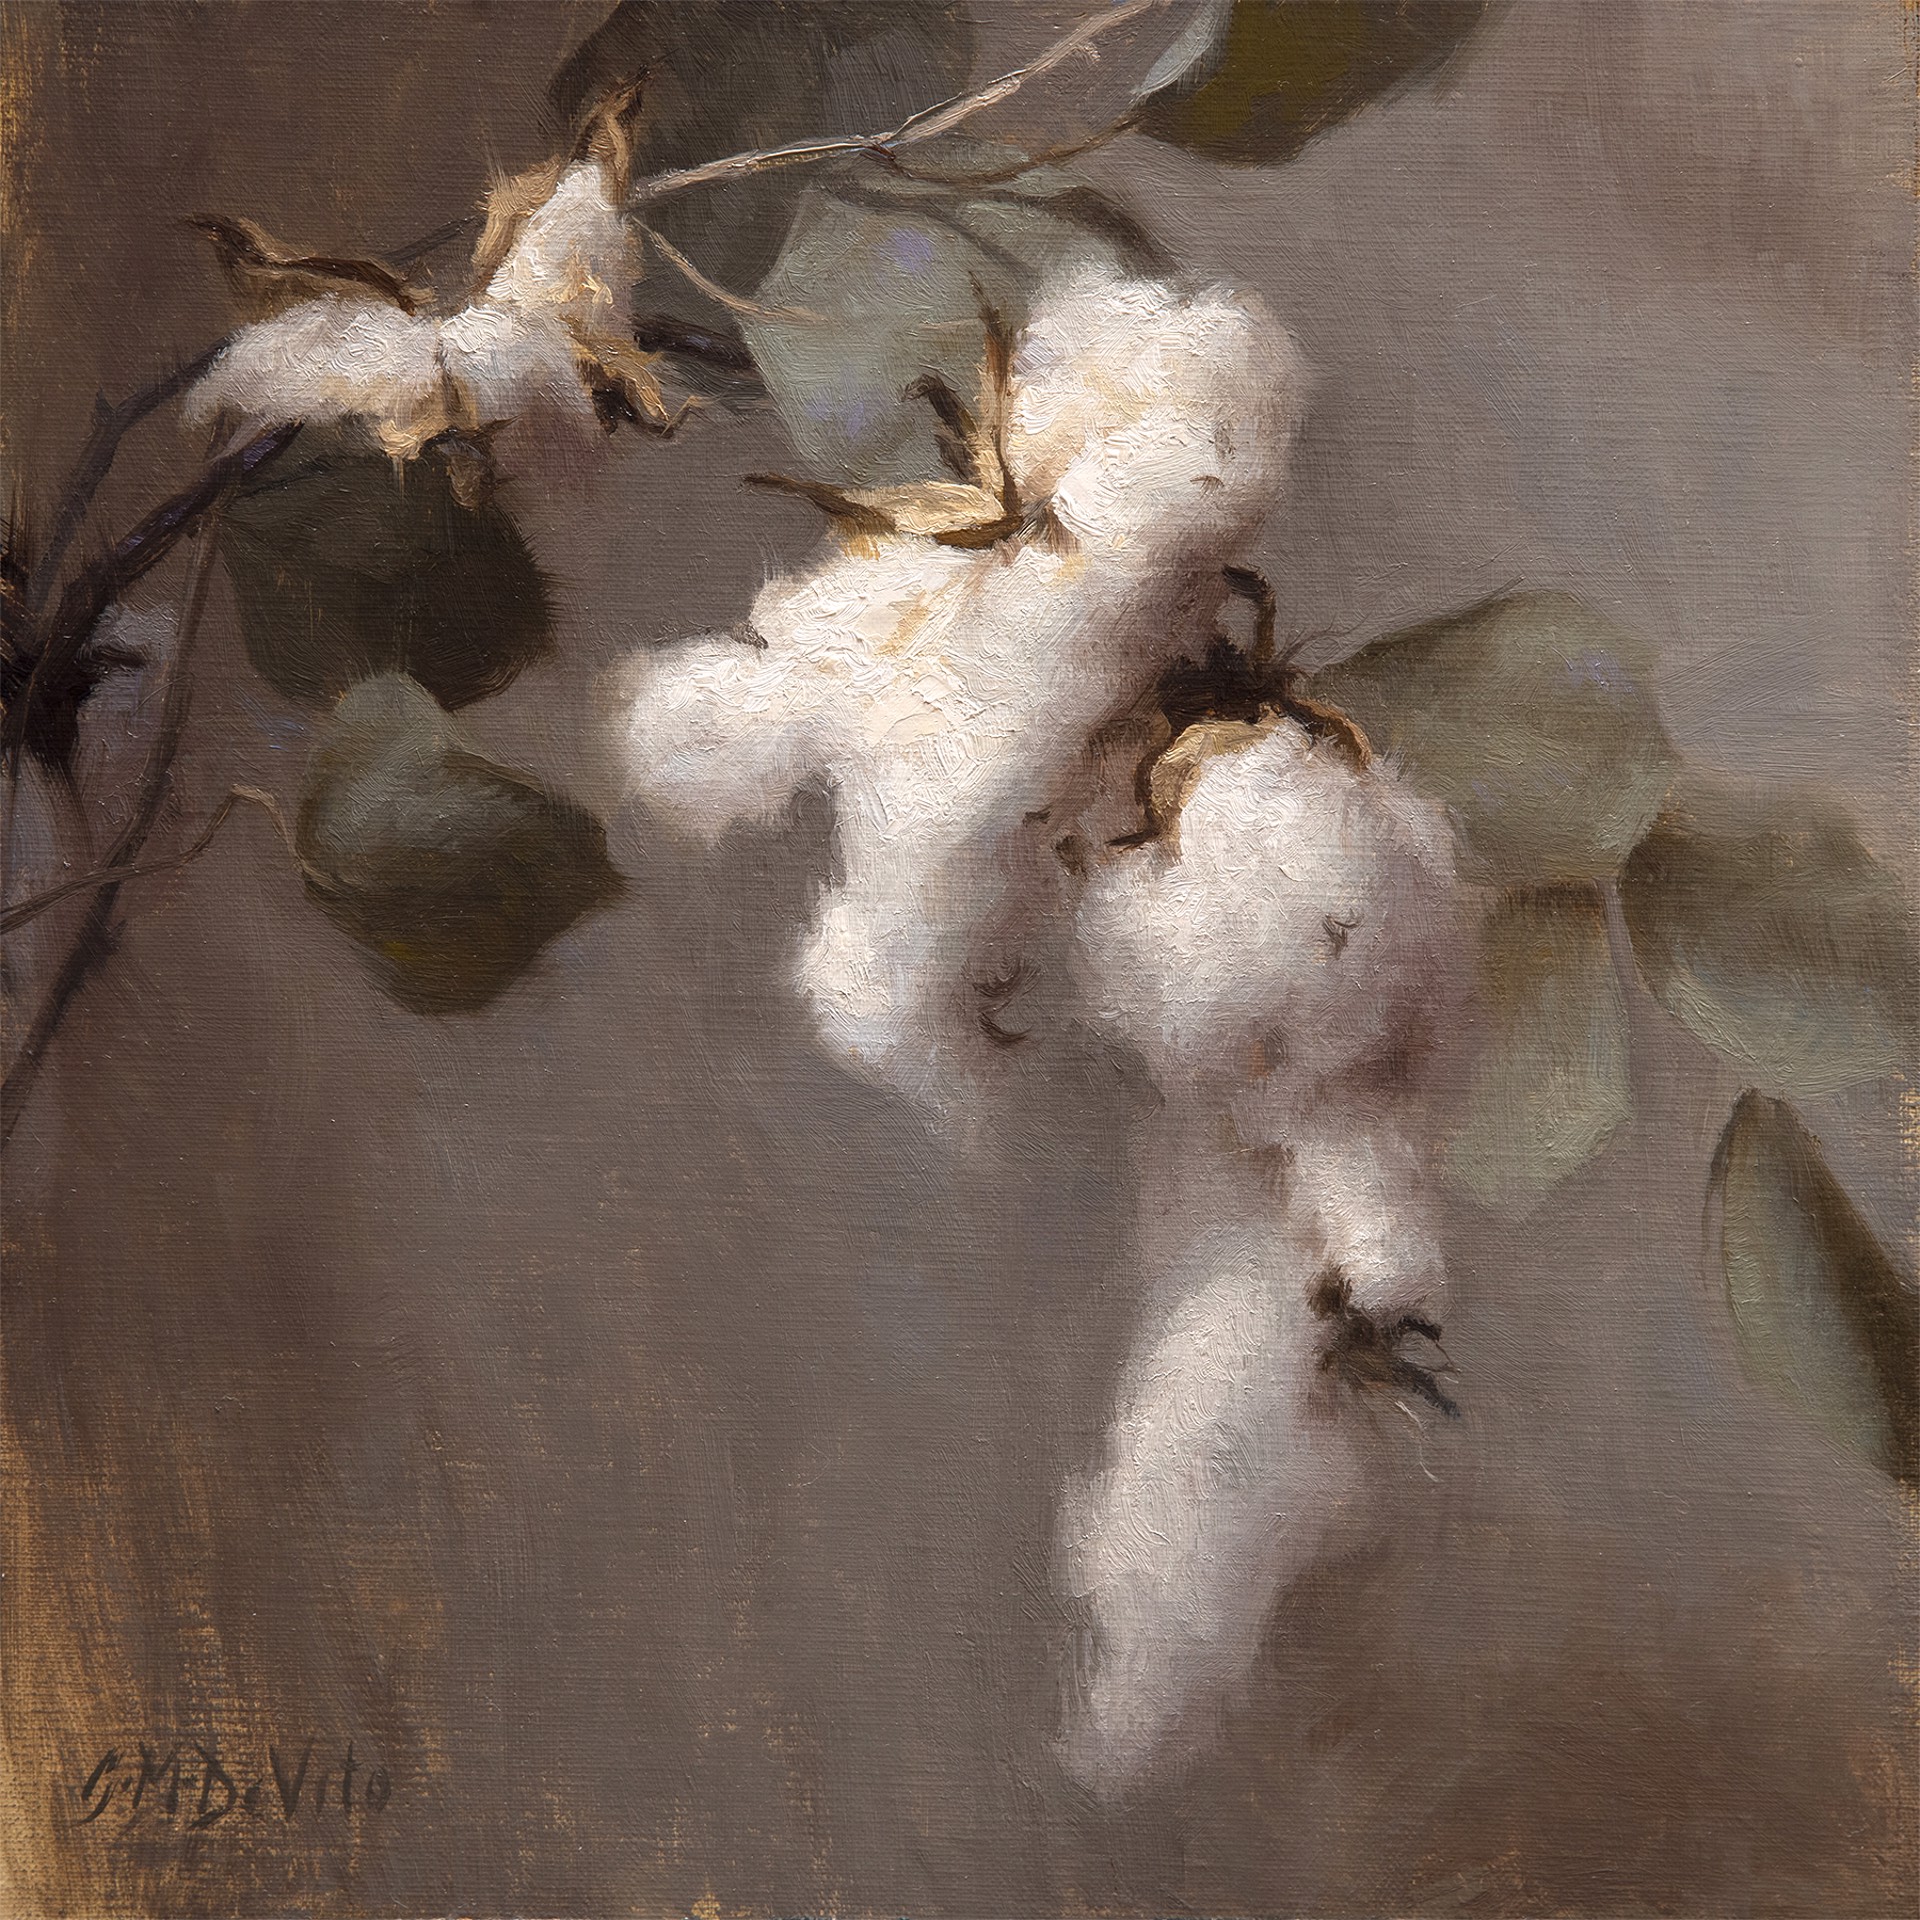 Cotton Bough by Grace DeVito